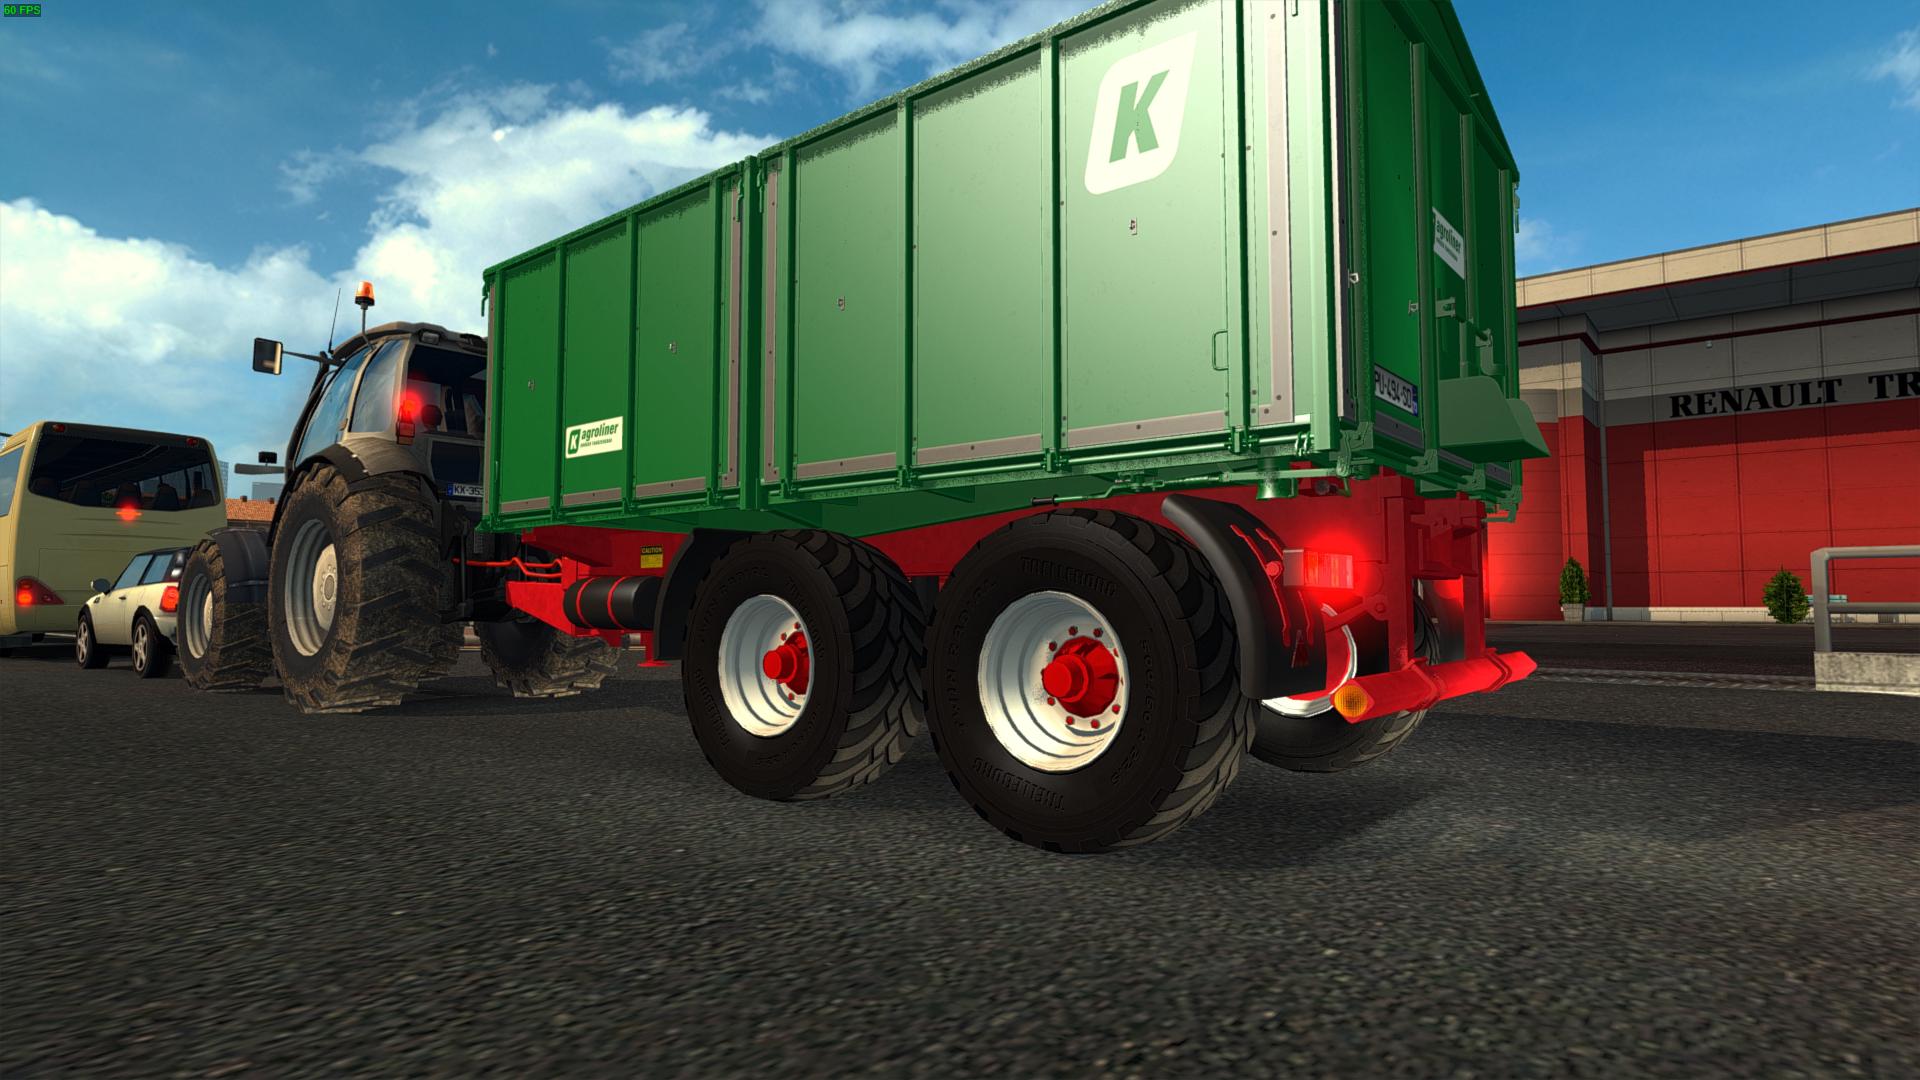 euro truck simulator 2 bus mod play online